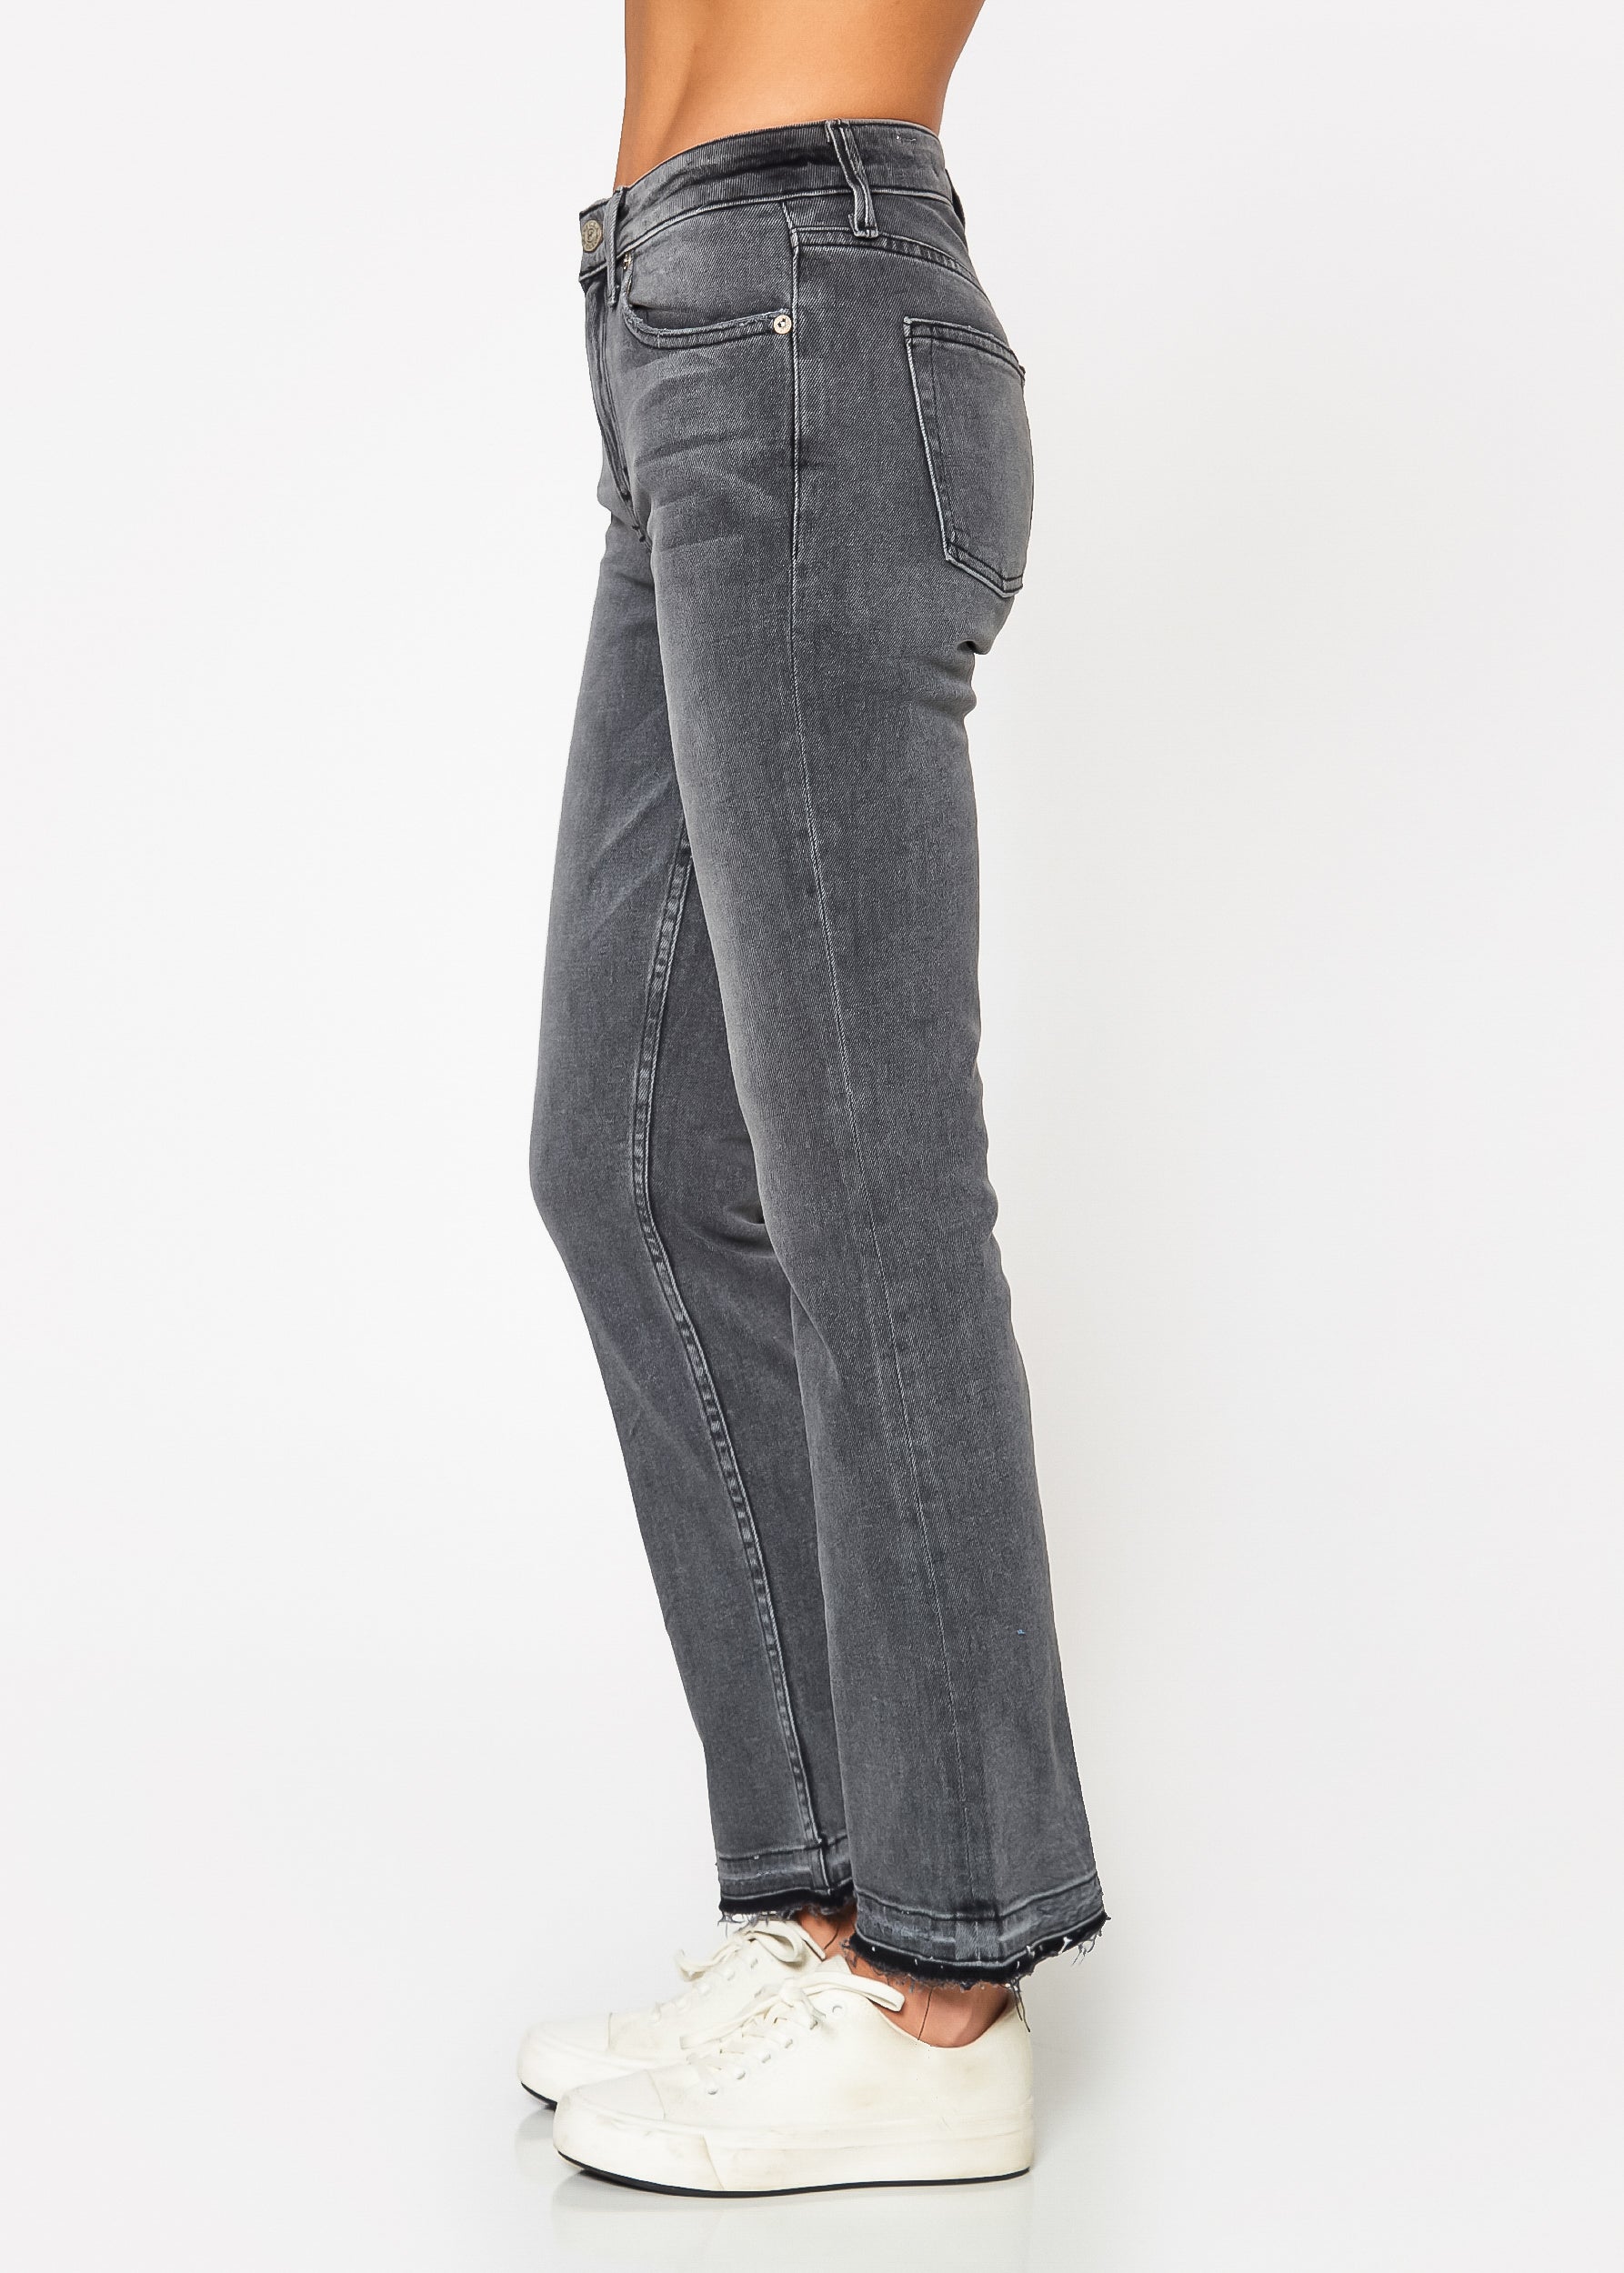 Farrah Kick Flare Jeans in Philly - Noend Denim